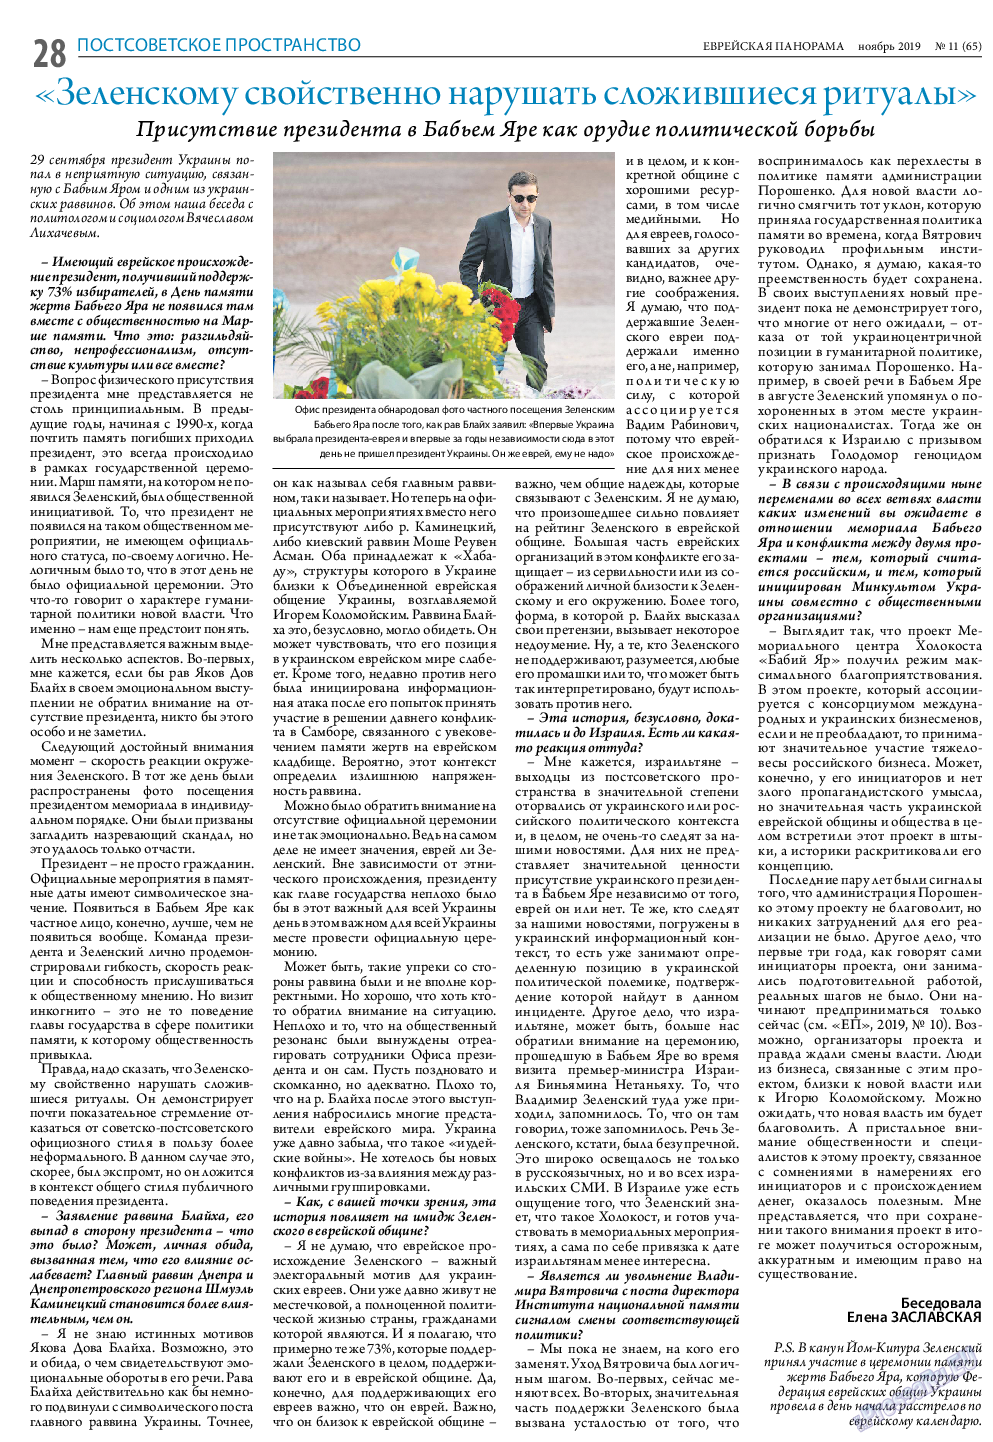 Еврейская панорама, газета. 2019 №11 стр.28